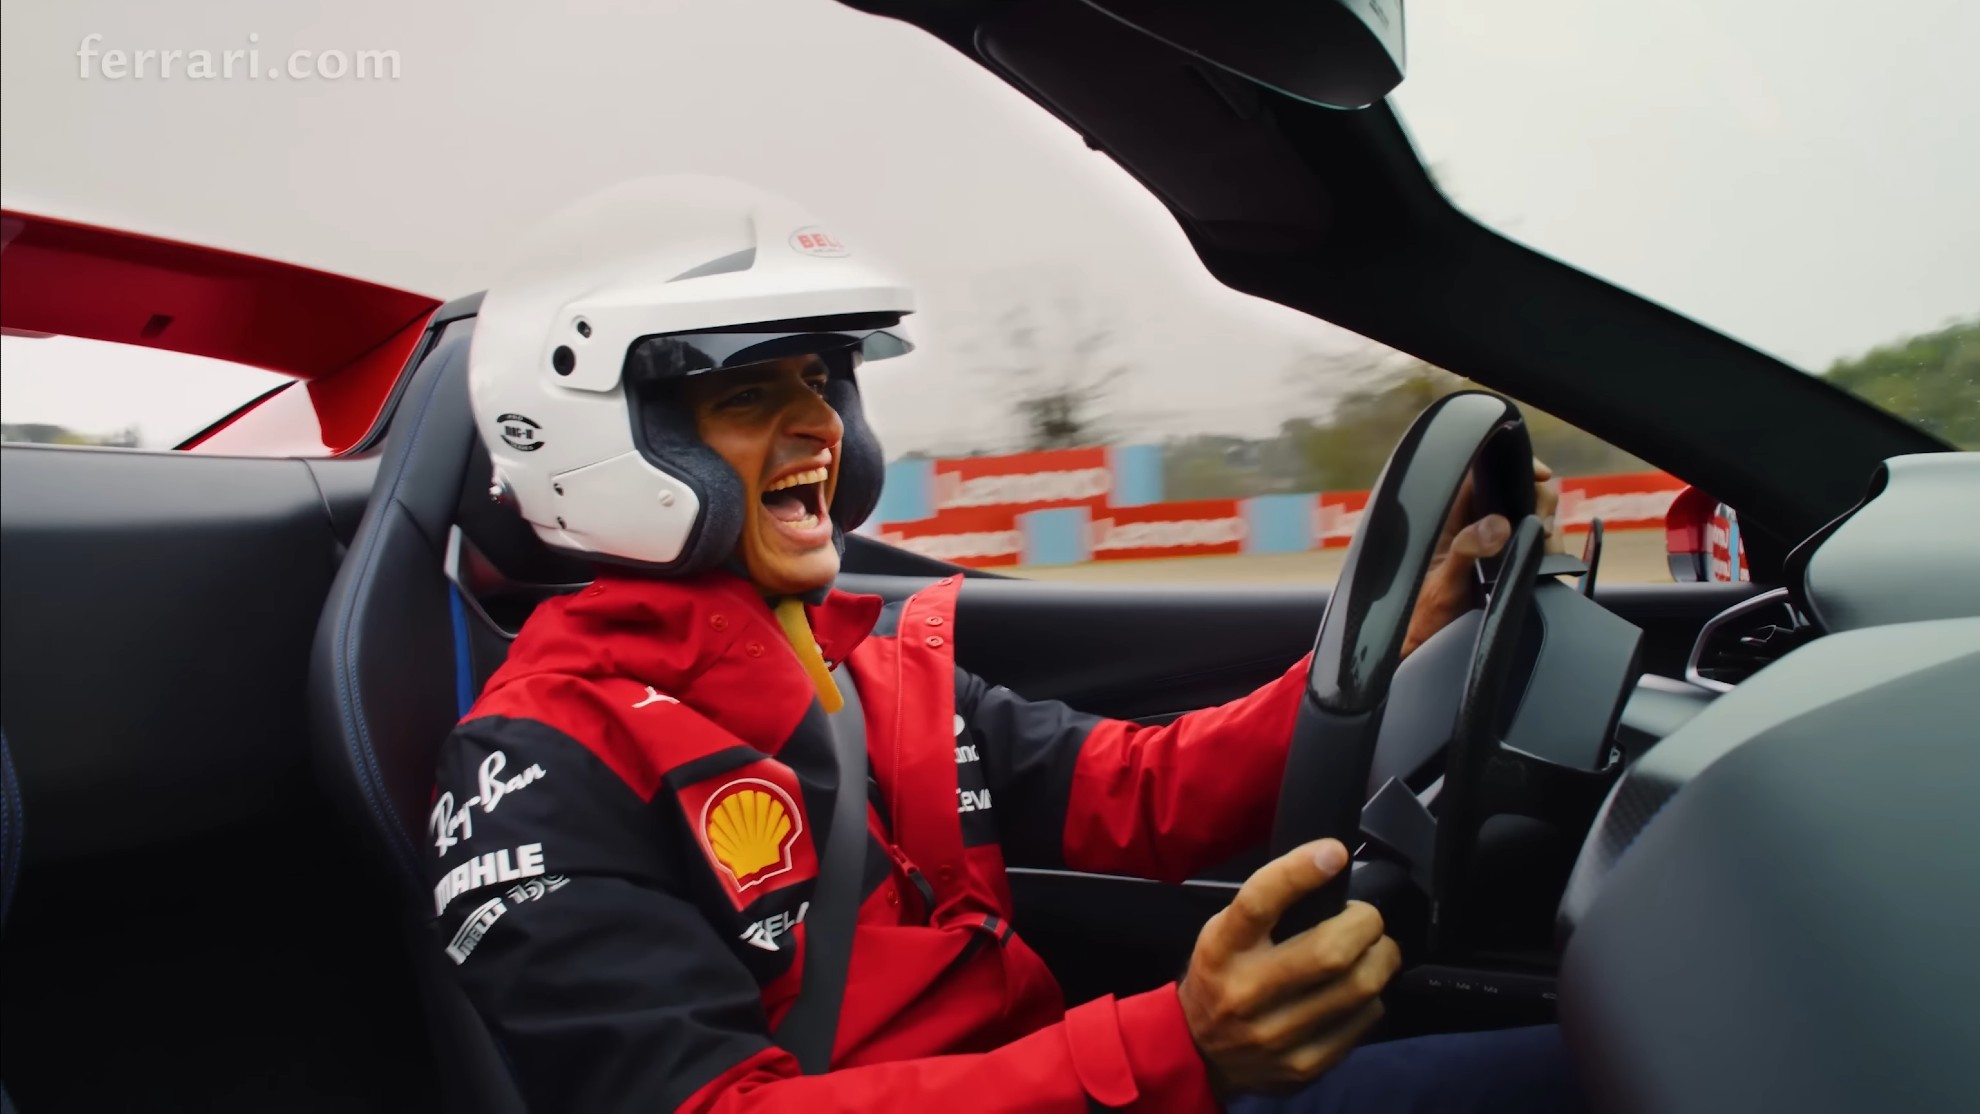 Carlos Sainz - Charles Leclerc - Ferrari 296 GTS - Imola - Formula 1 - hibrido - spider